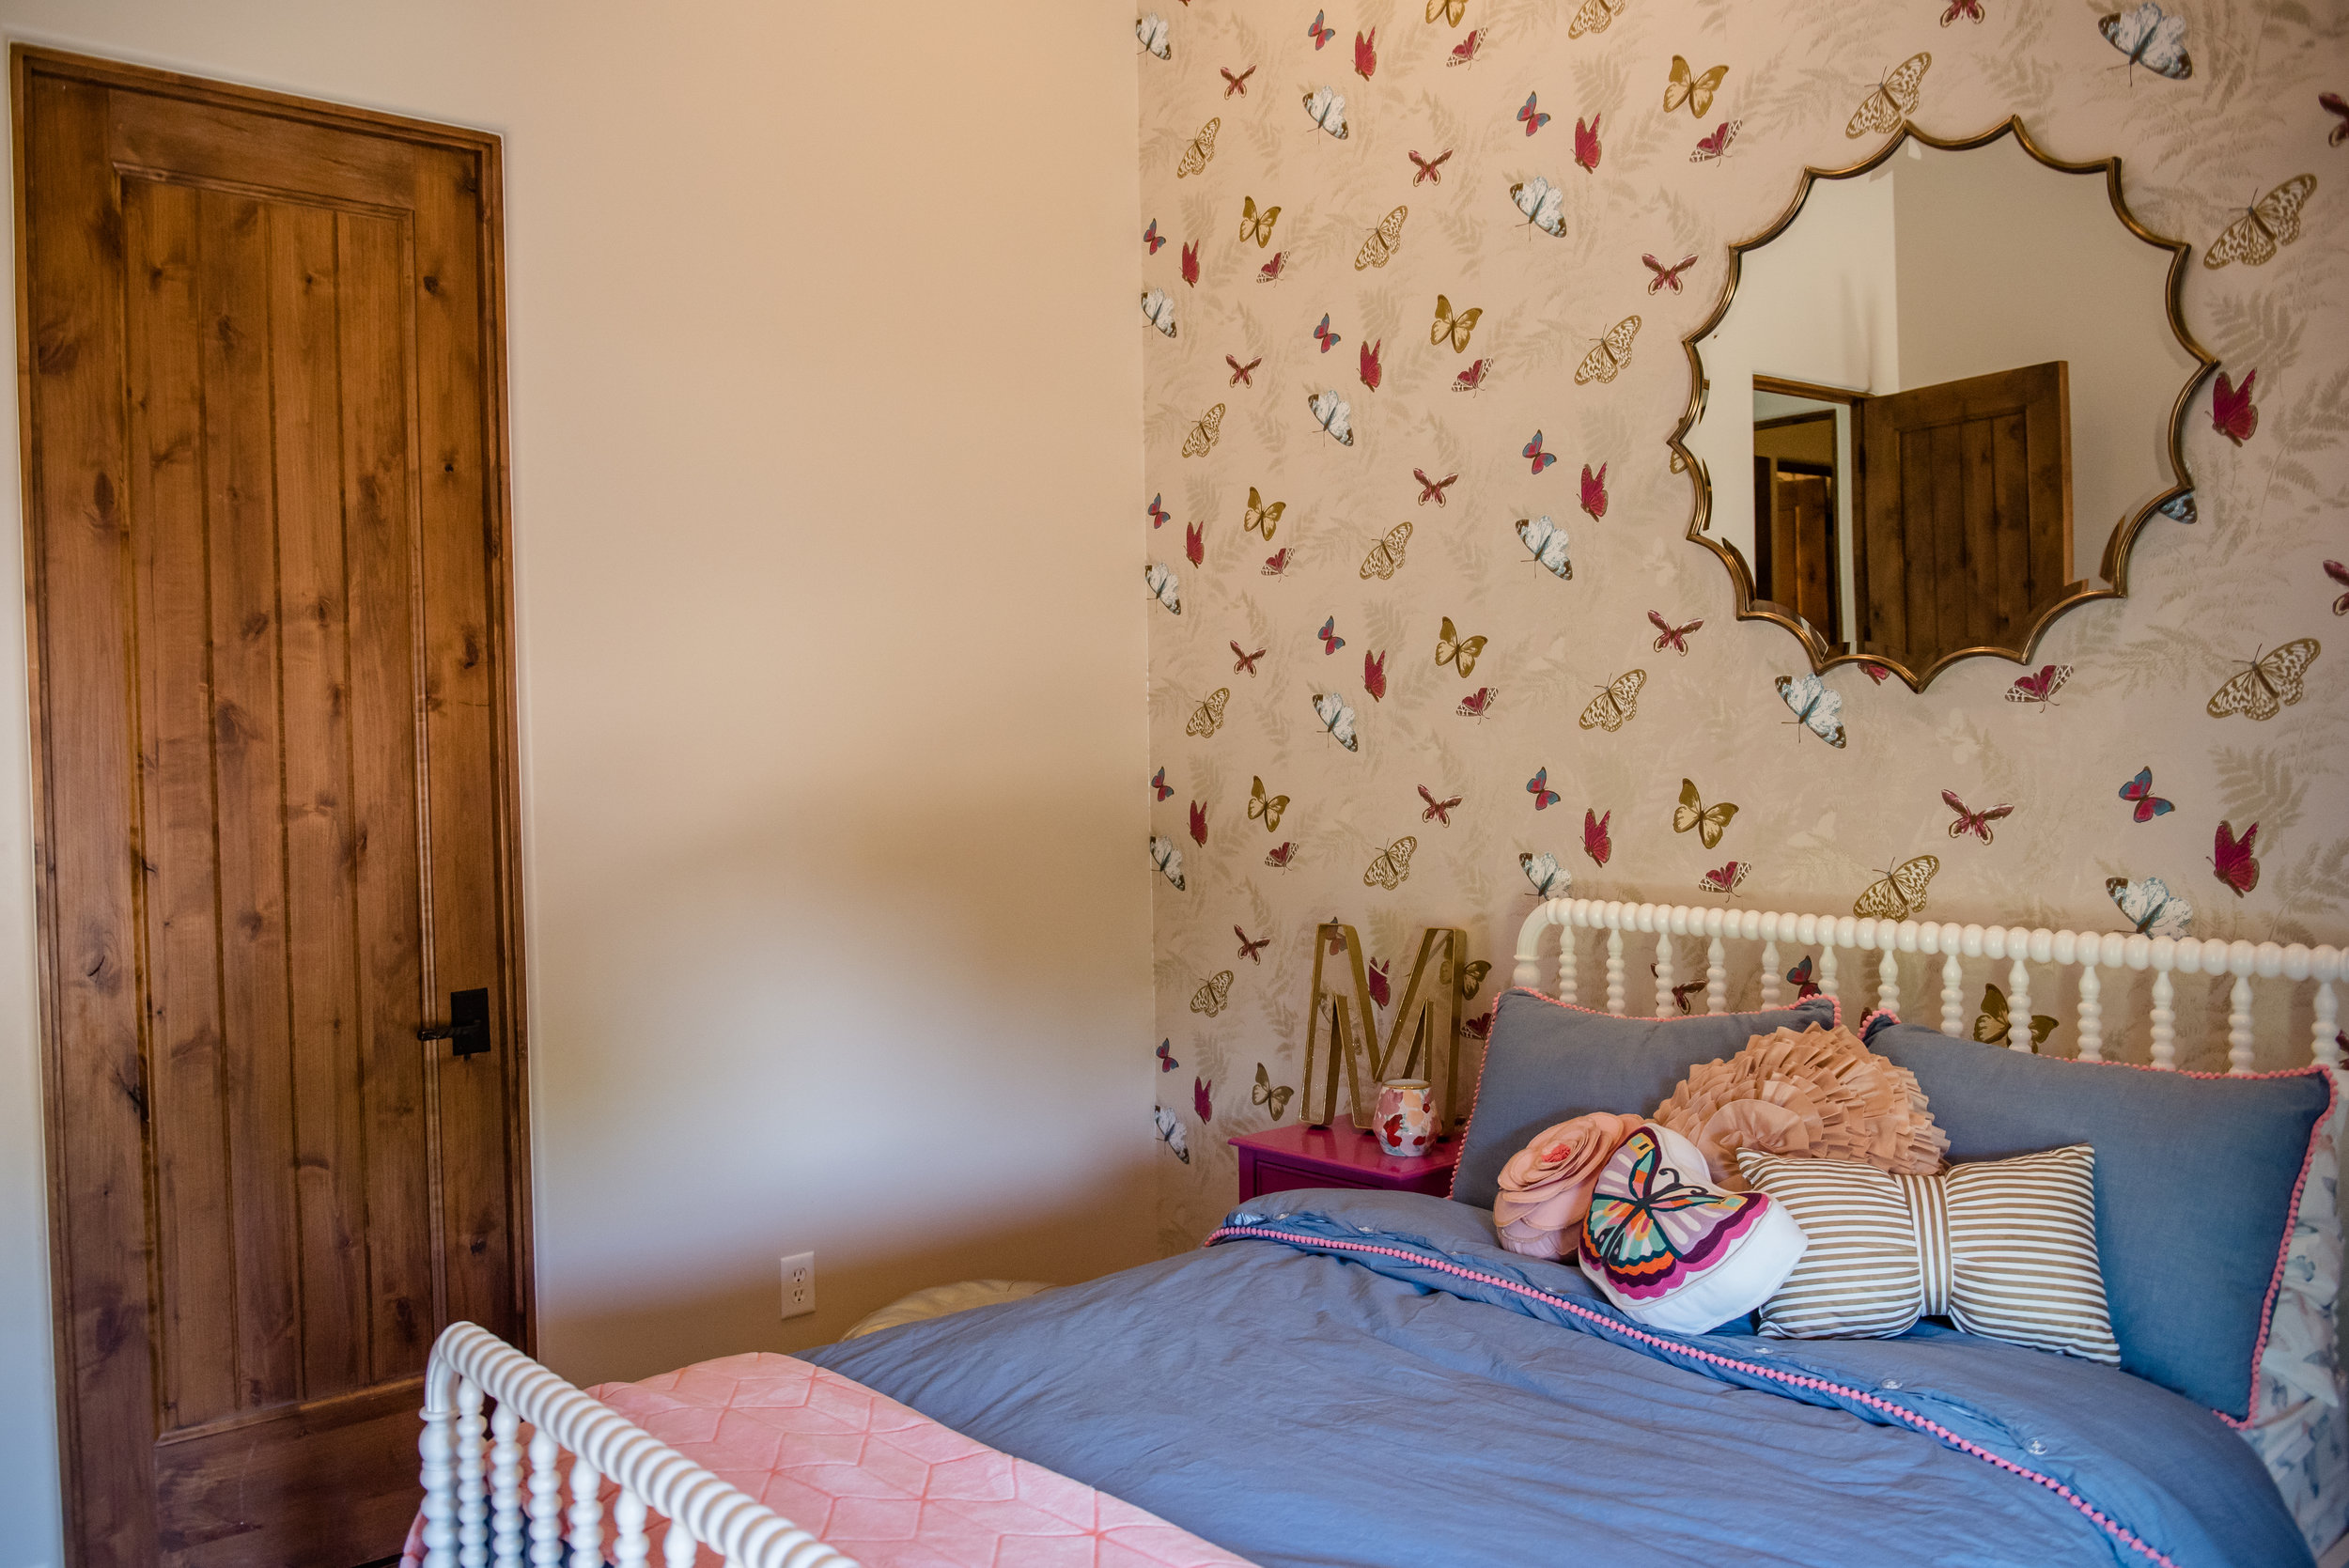 48+girlsroom+mirror+wallpaper+butterfly+bedding.jpg